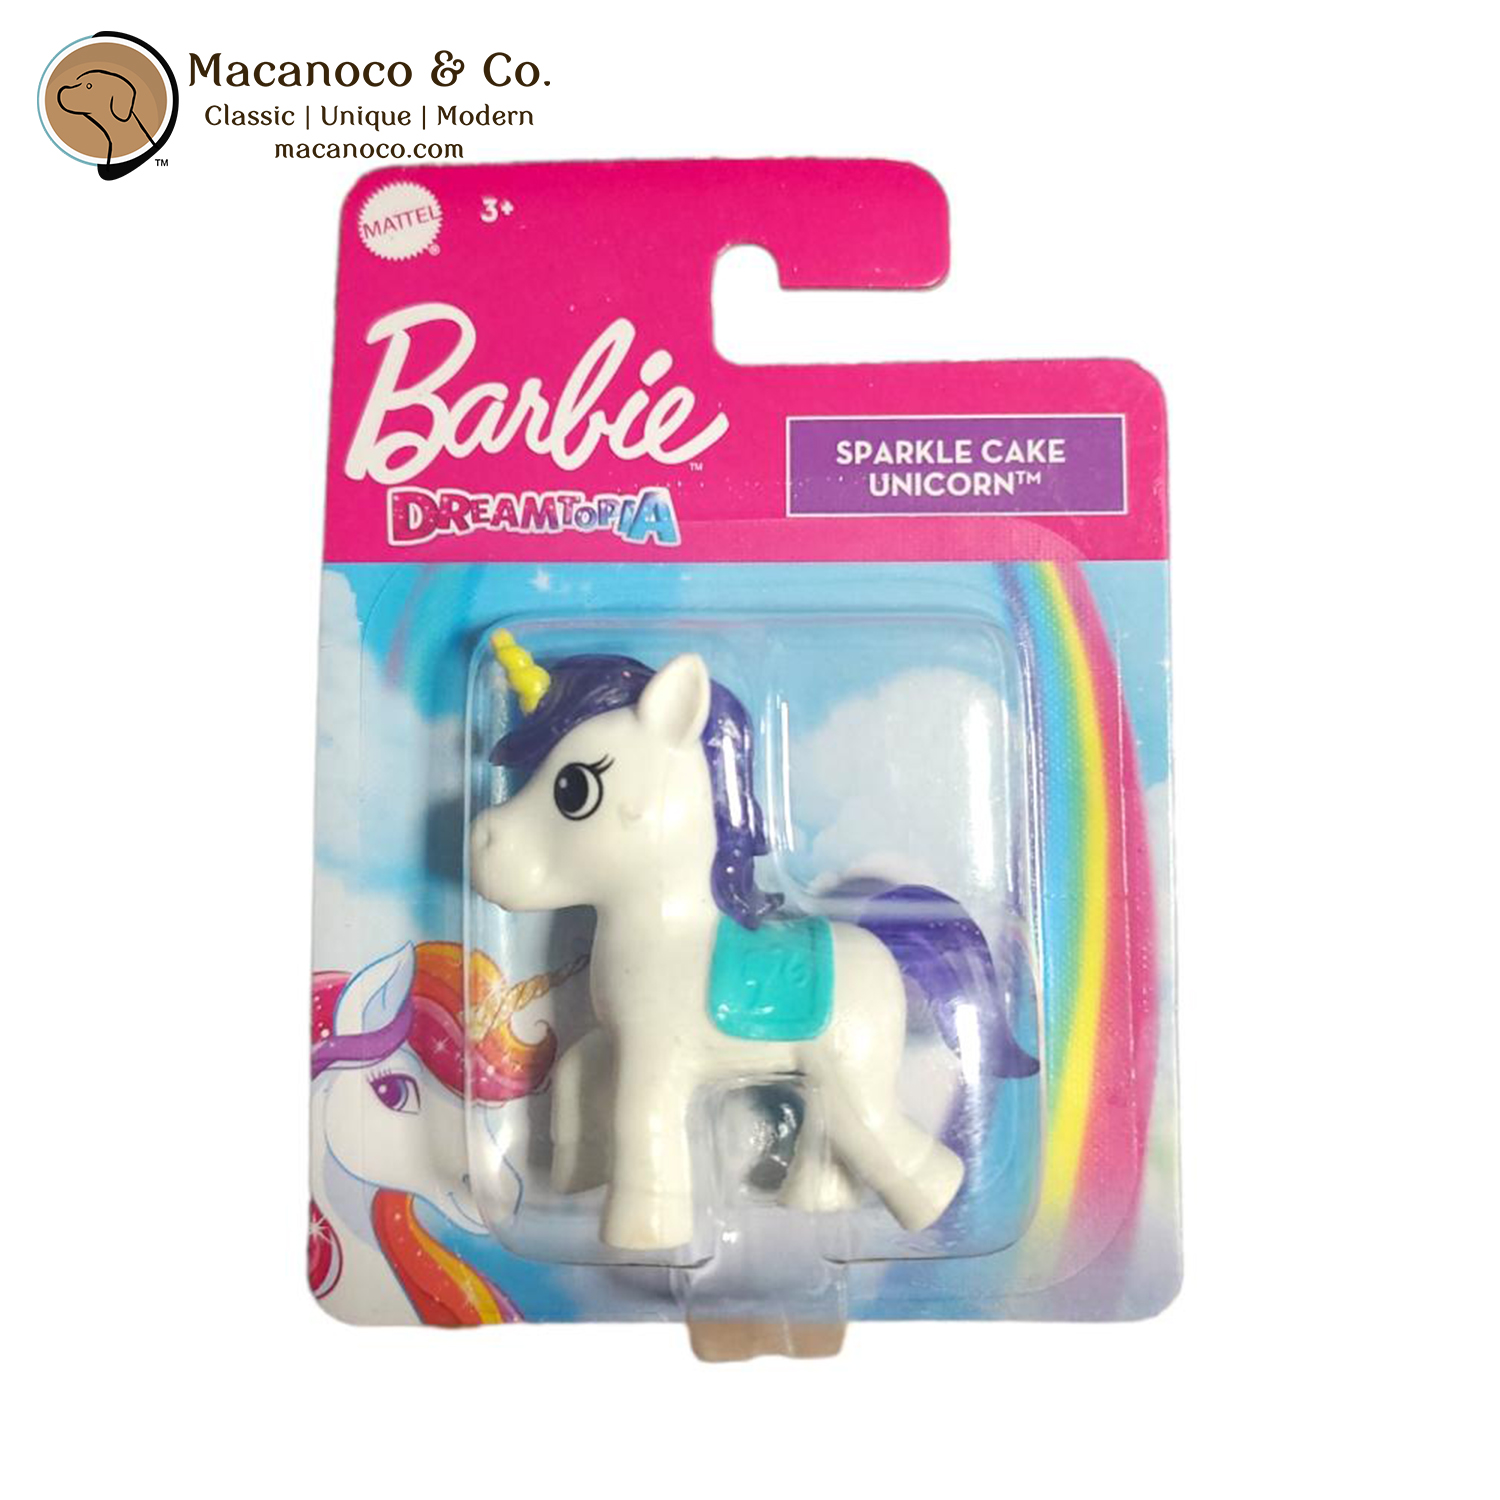 HFG33 Barbie Dreamtopia Sparkle Cake Unicorn Accessory Pack Toy 1